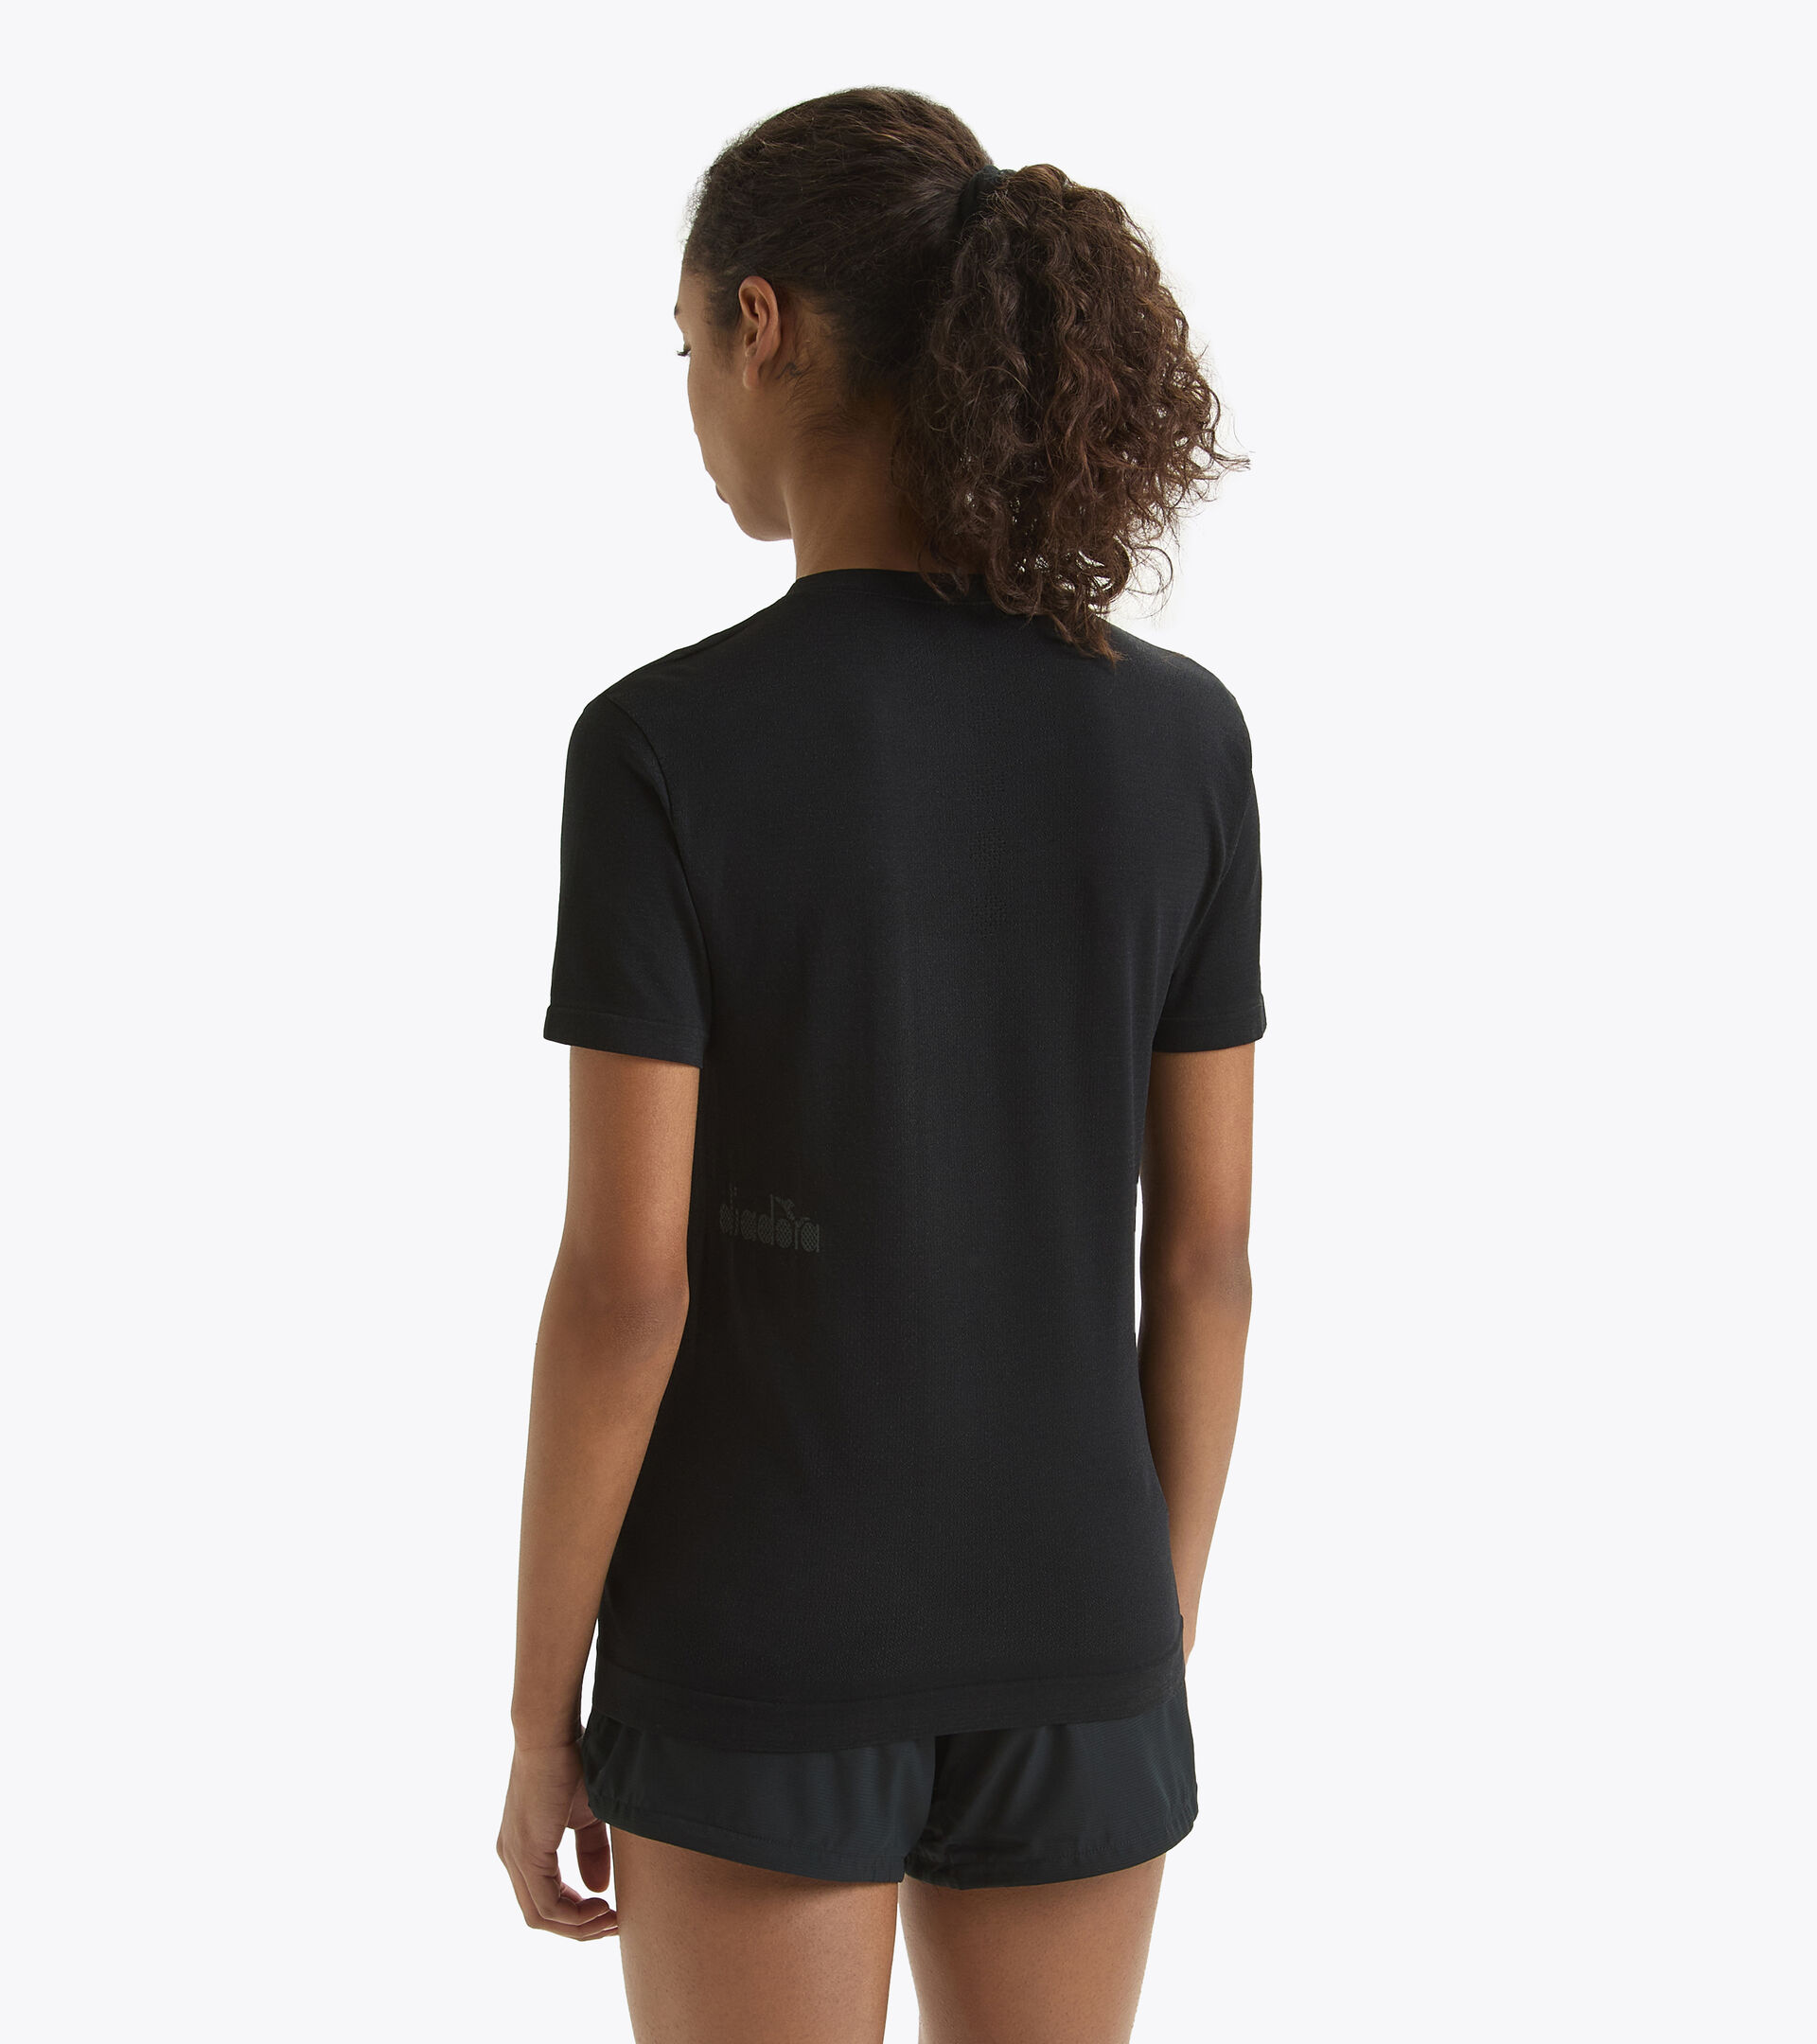 Camiseta de running sin costuras - Made in Italy - Mujer L. SS T-SHIRT SKIN FRIENDLY NEGRO - Diadora